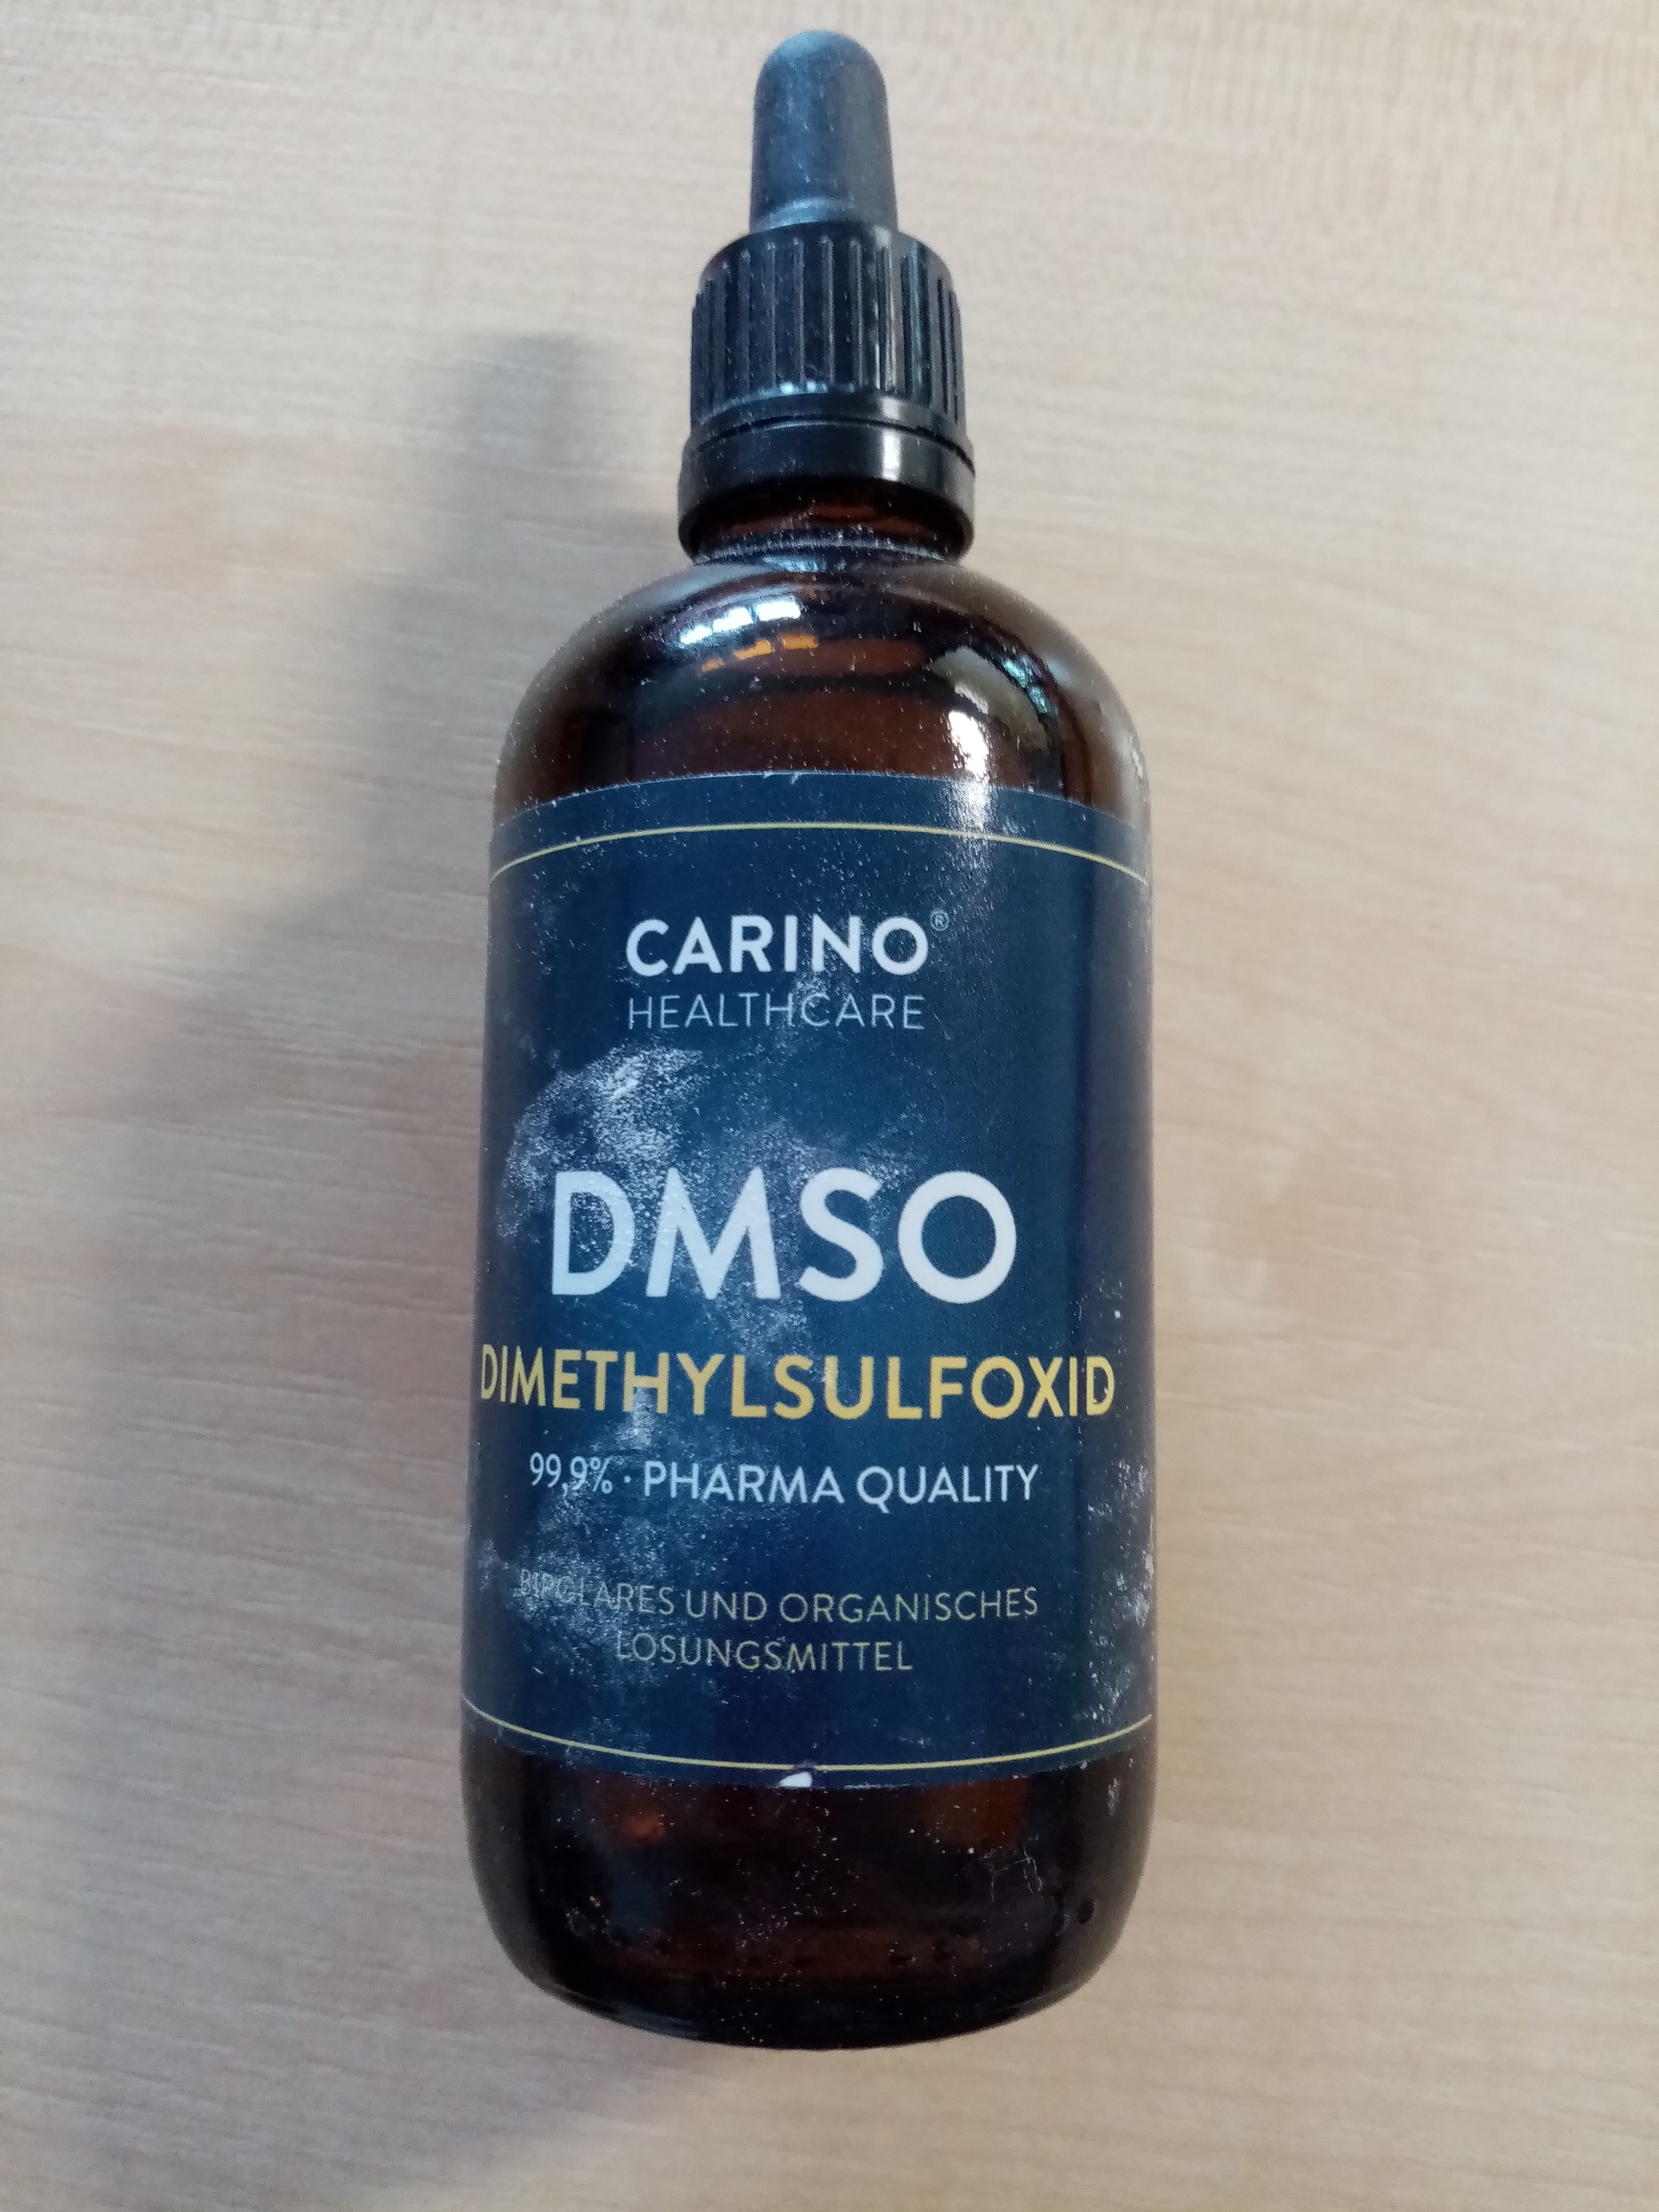 Carino Healthcare DMSO dimethylsulfoxid 99